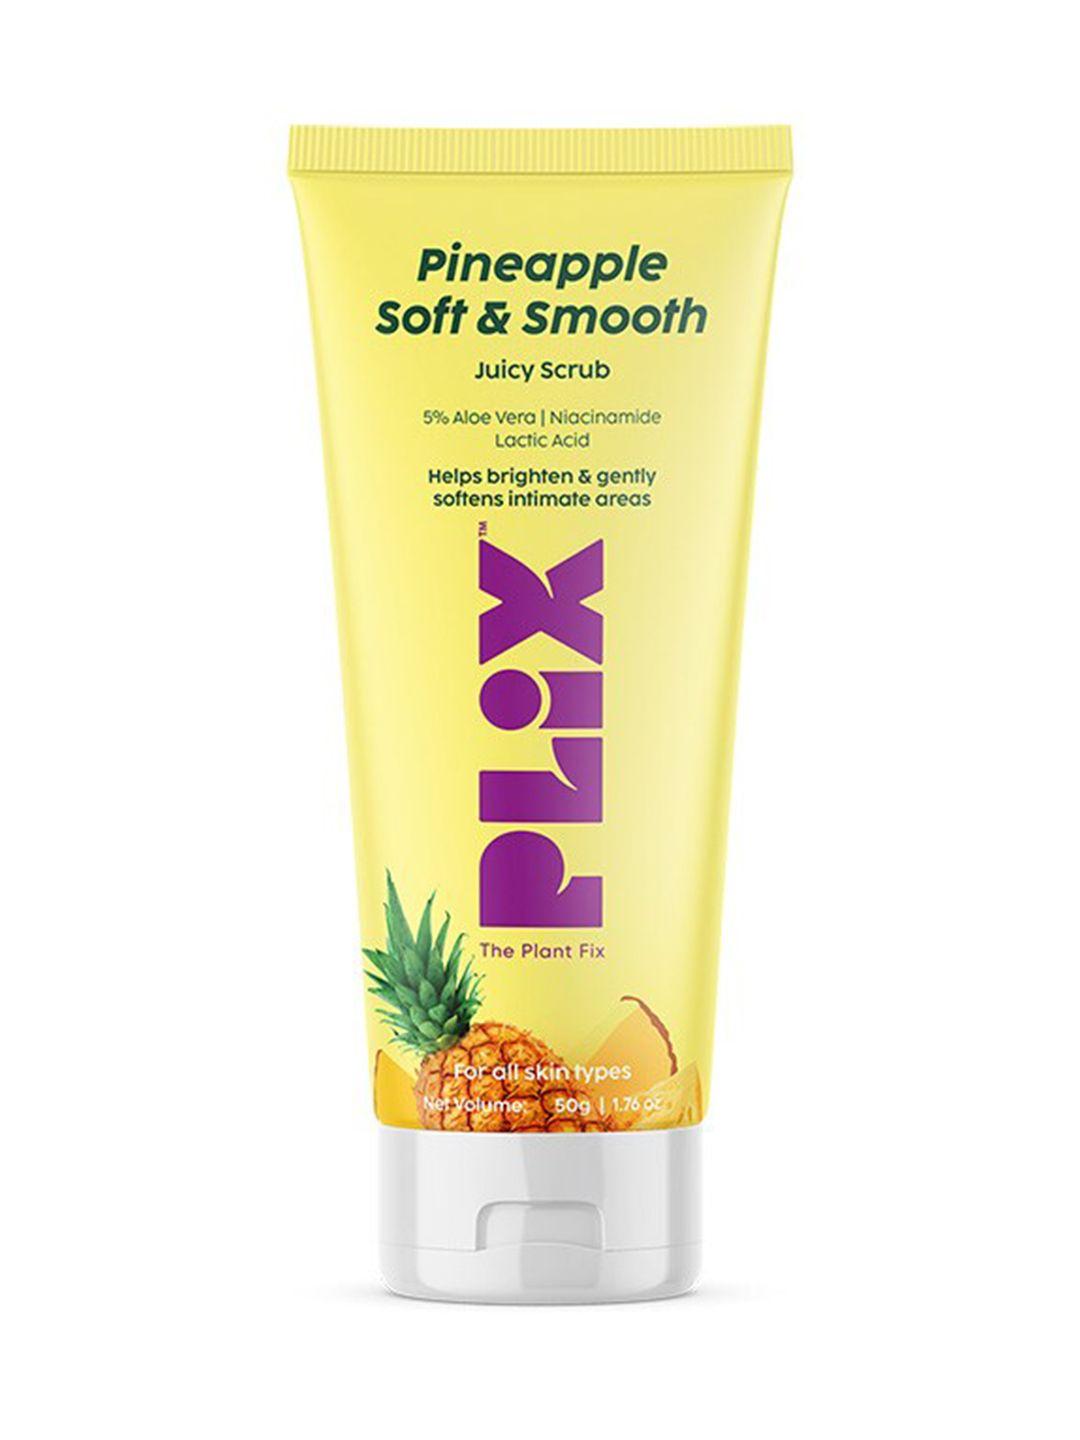 plix the plant fix pineapple soft & smooth juicy scrub - 50g